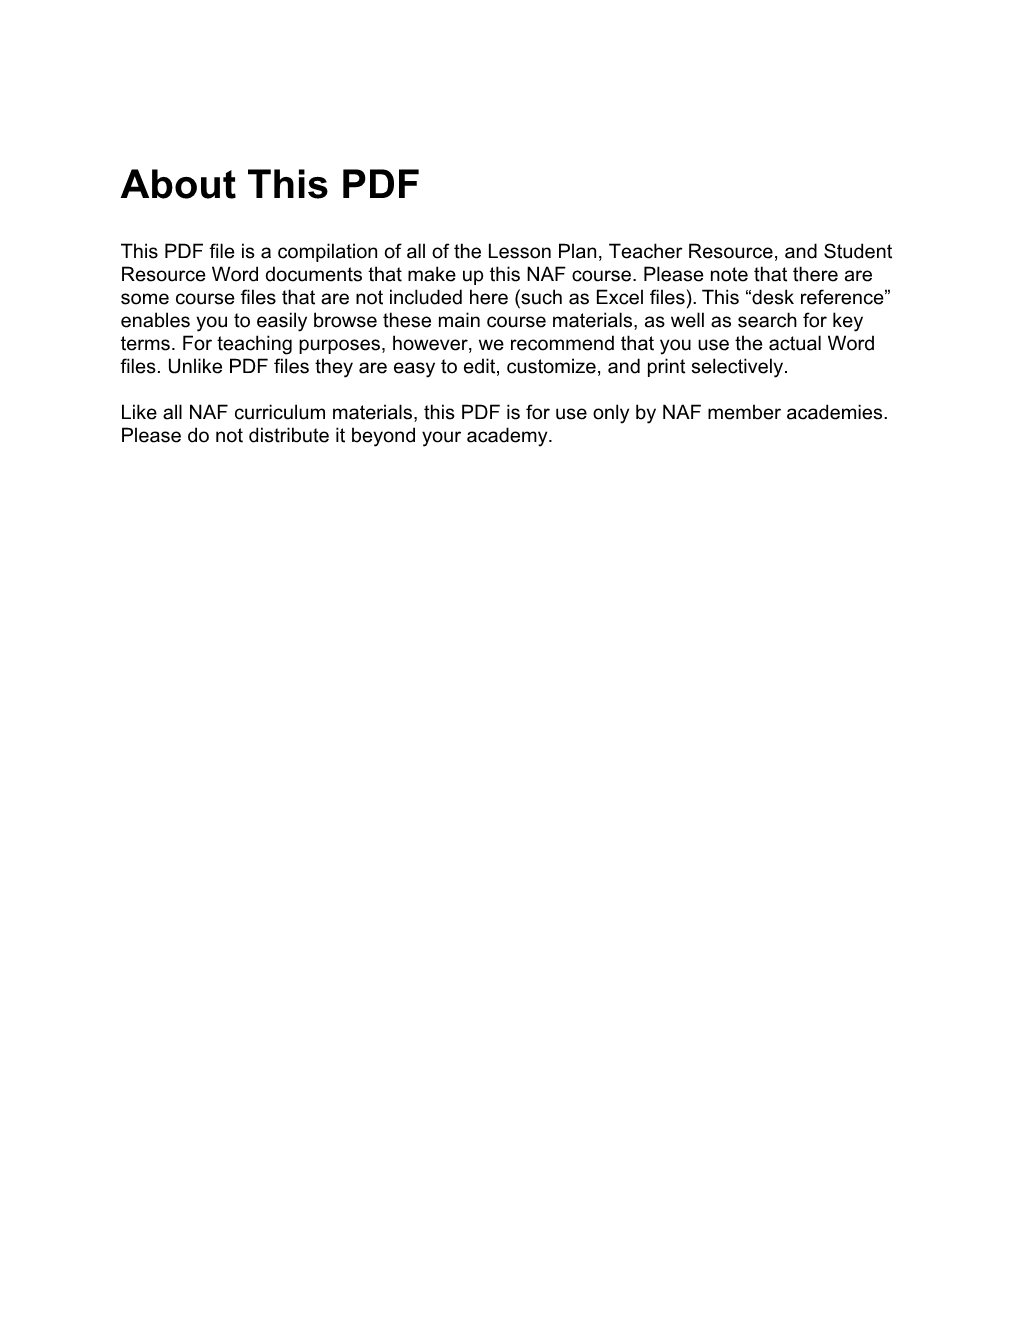 PDF Copy of Whole Course